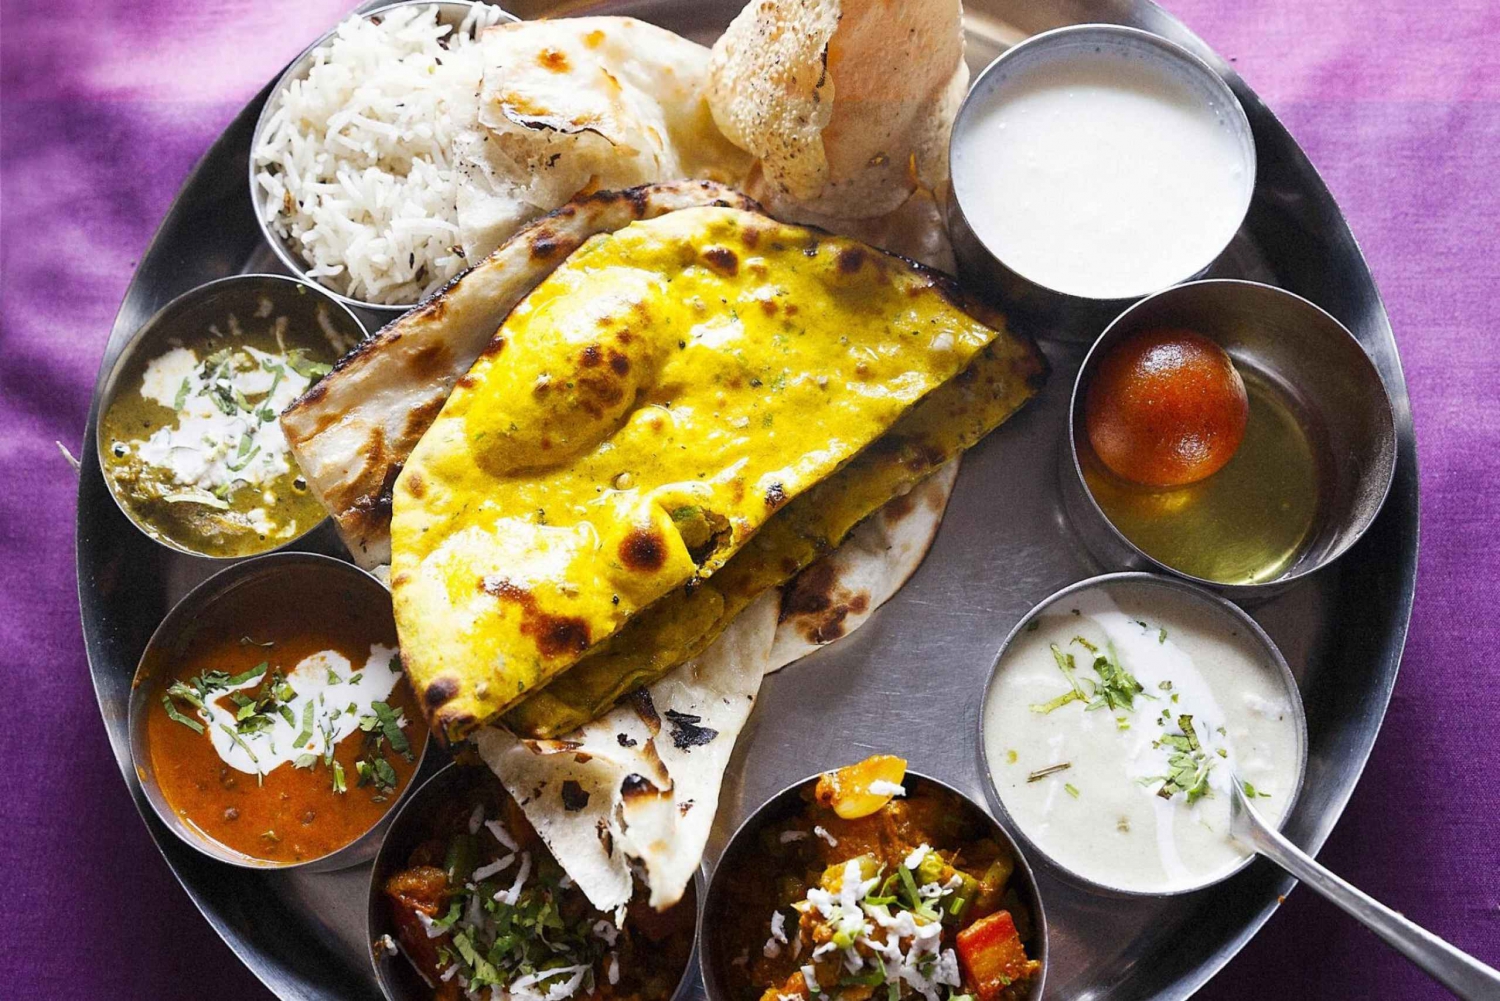 Jaipur Authentieke Kooklessen en Diner met Familie Chef-kok